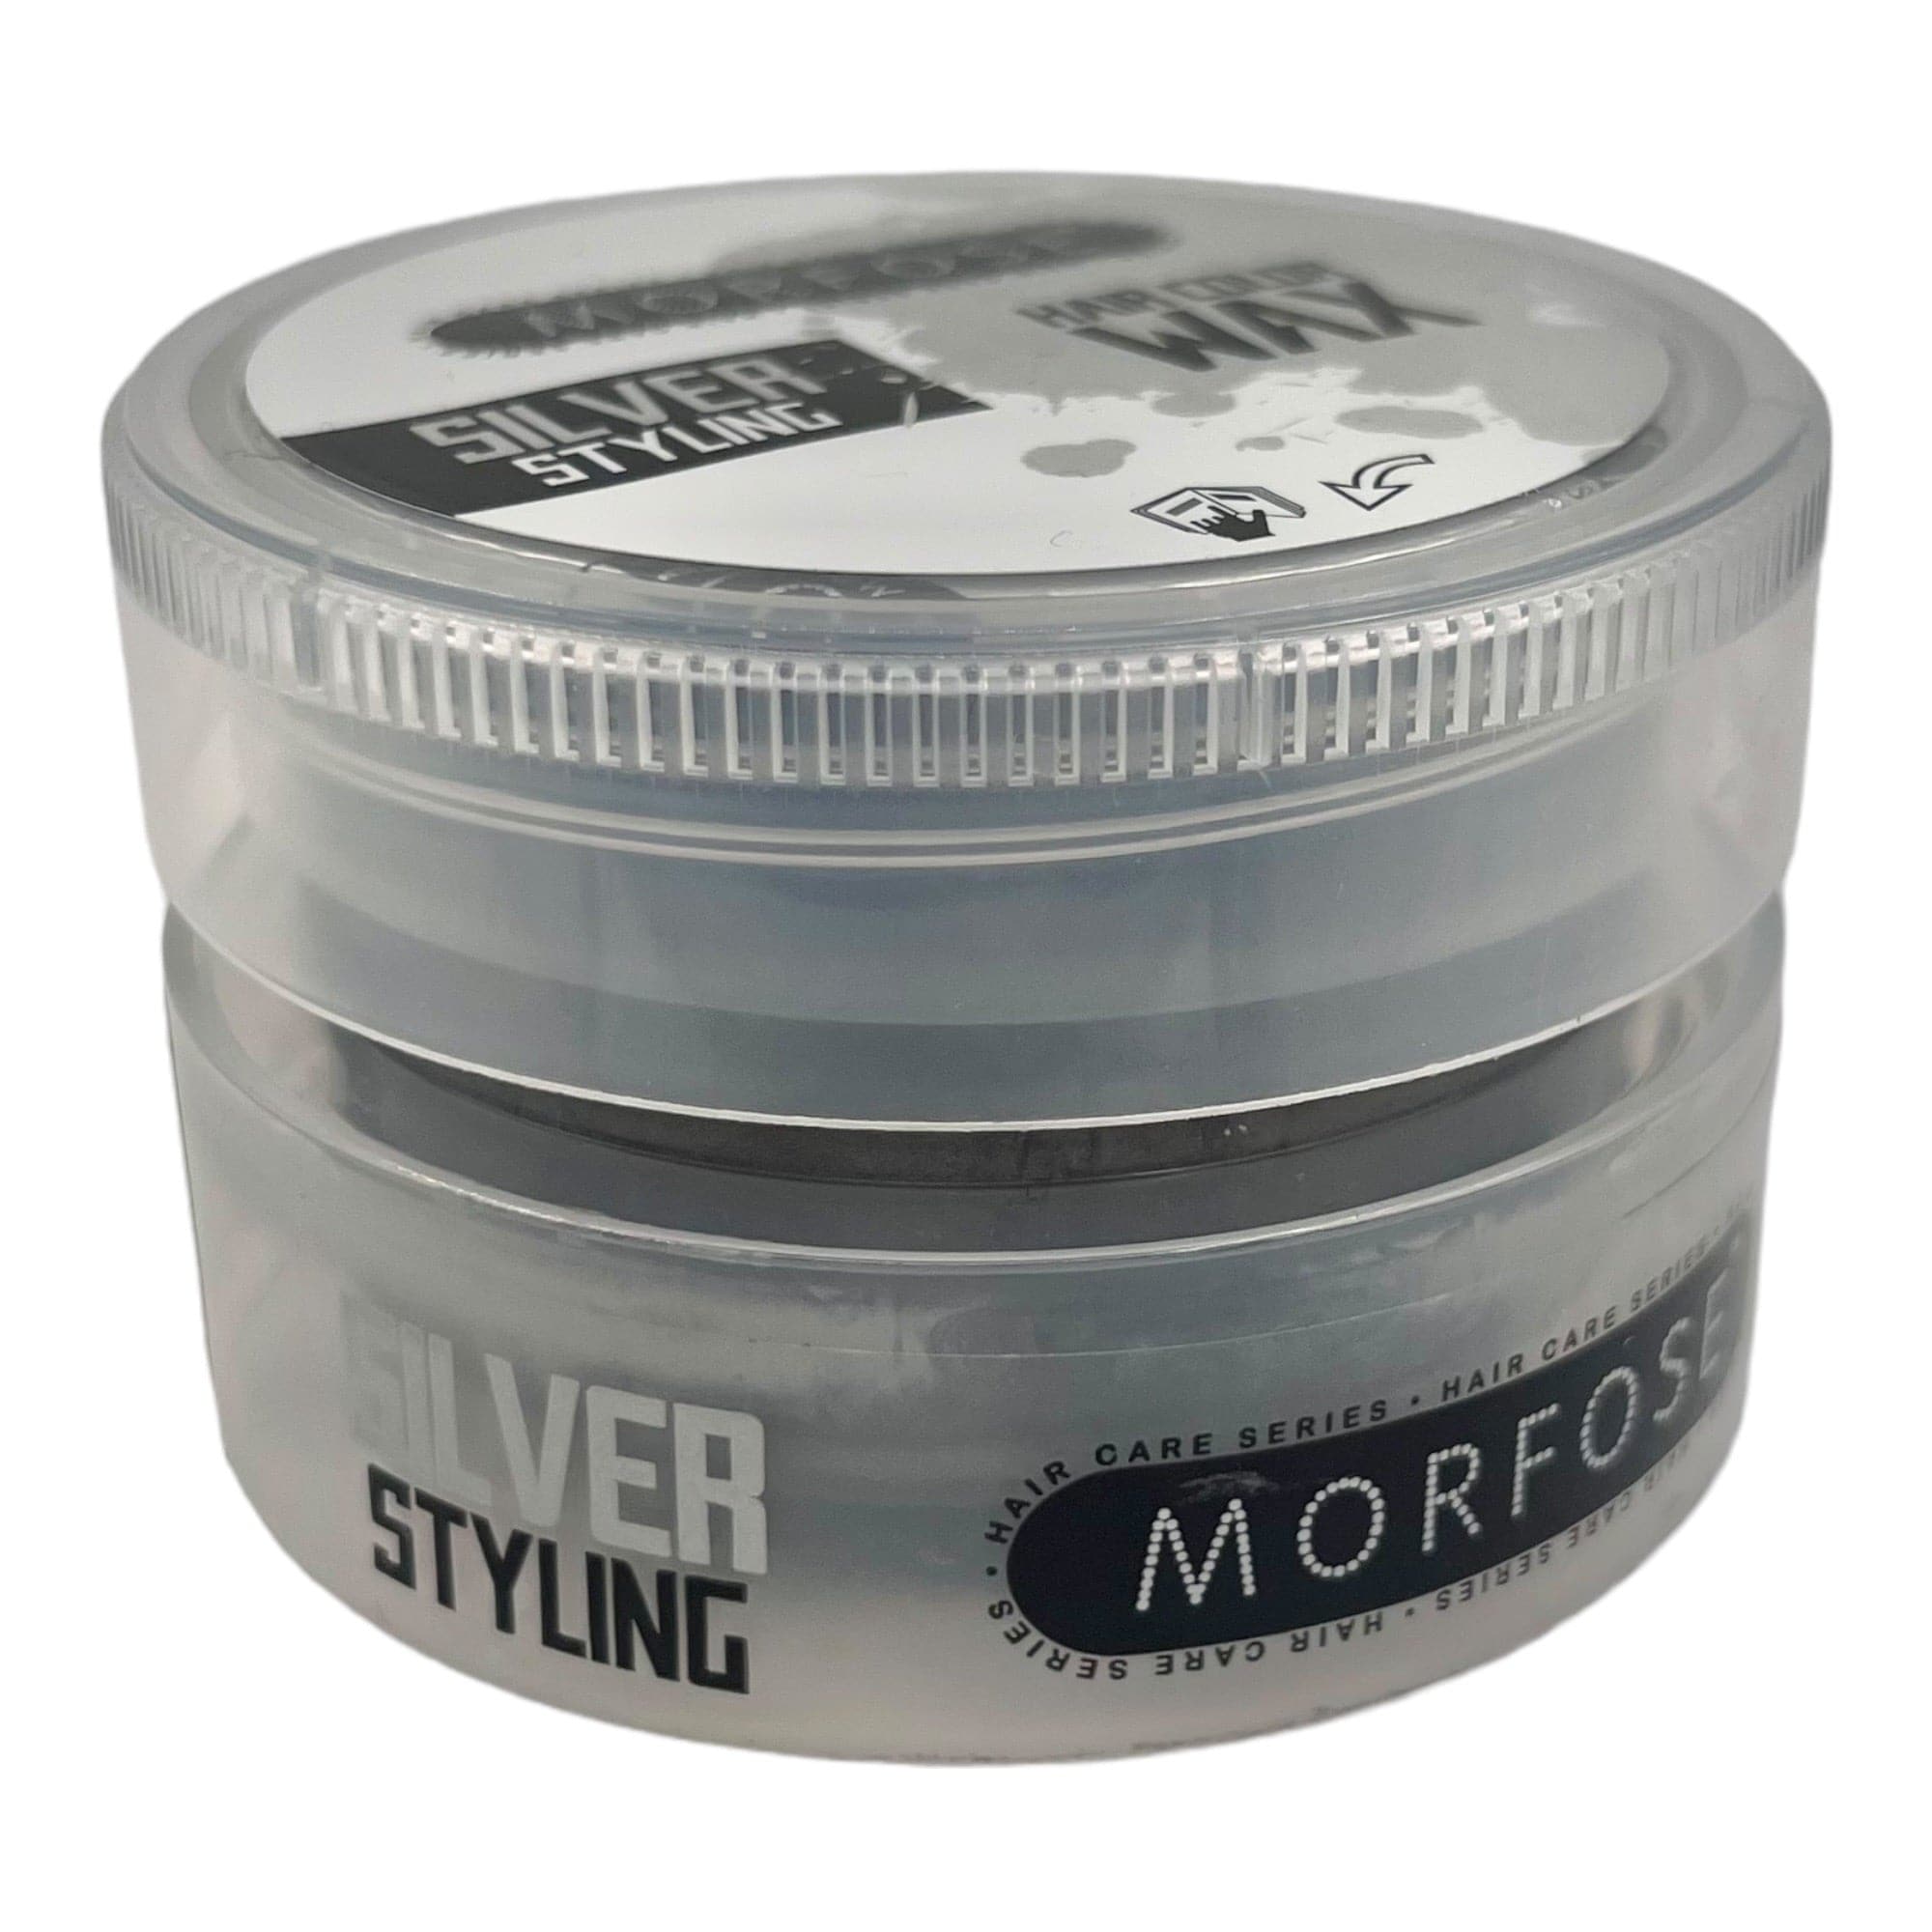 Morfose - Hair Colour Wax Silver Styling 100ml